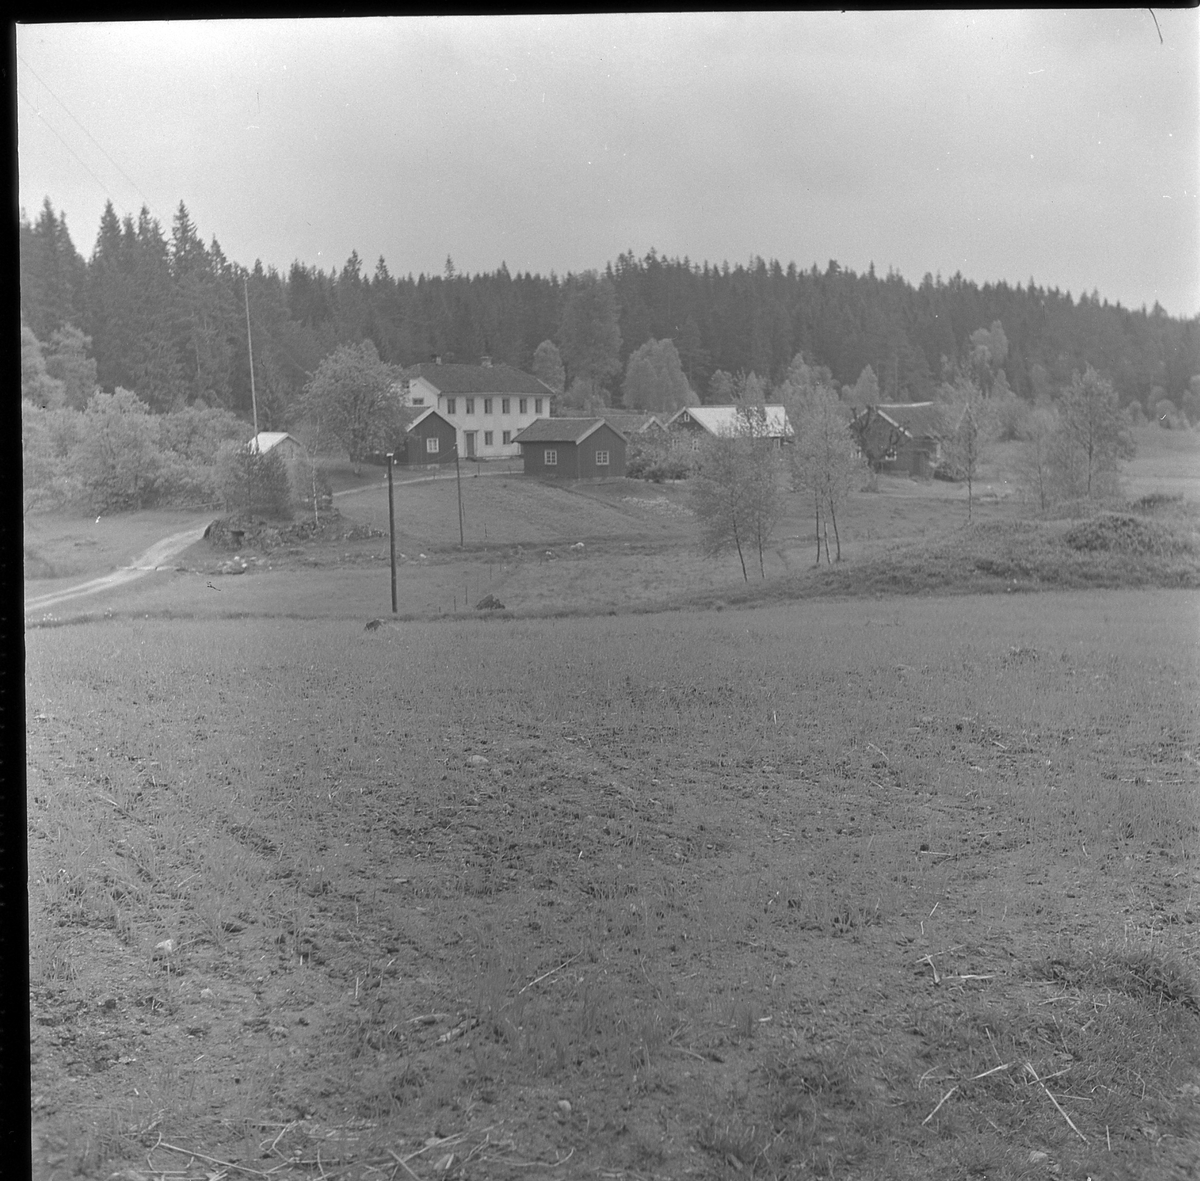 Jordbruksfastigheten Läkarebo, Ödenäs sn. 21 maj 1950